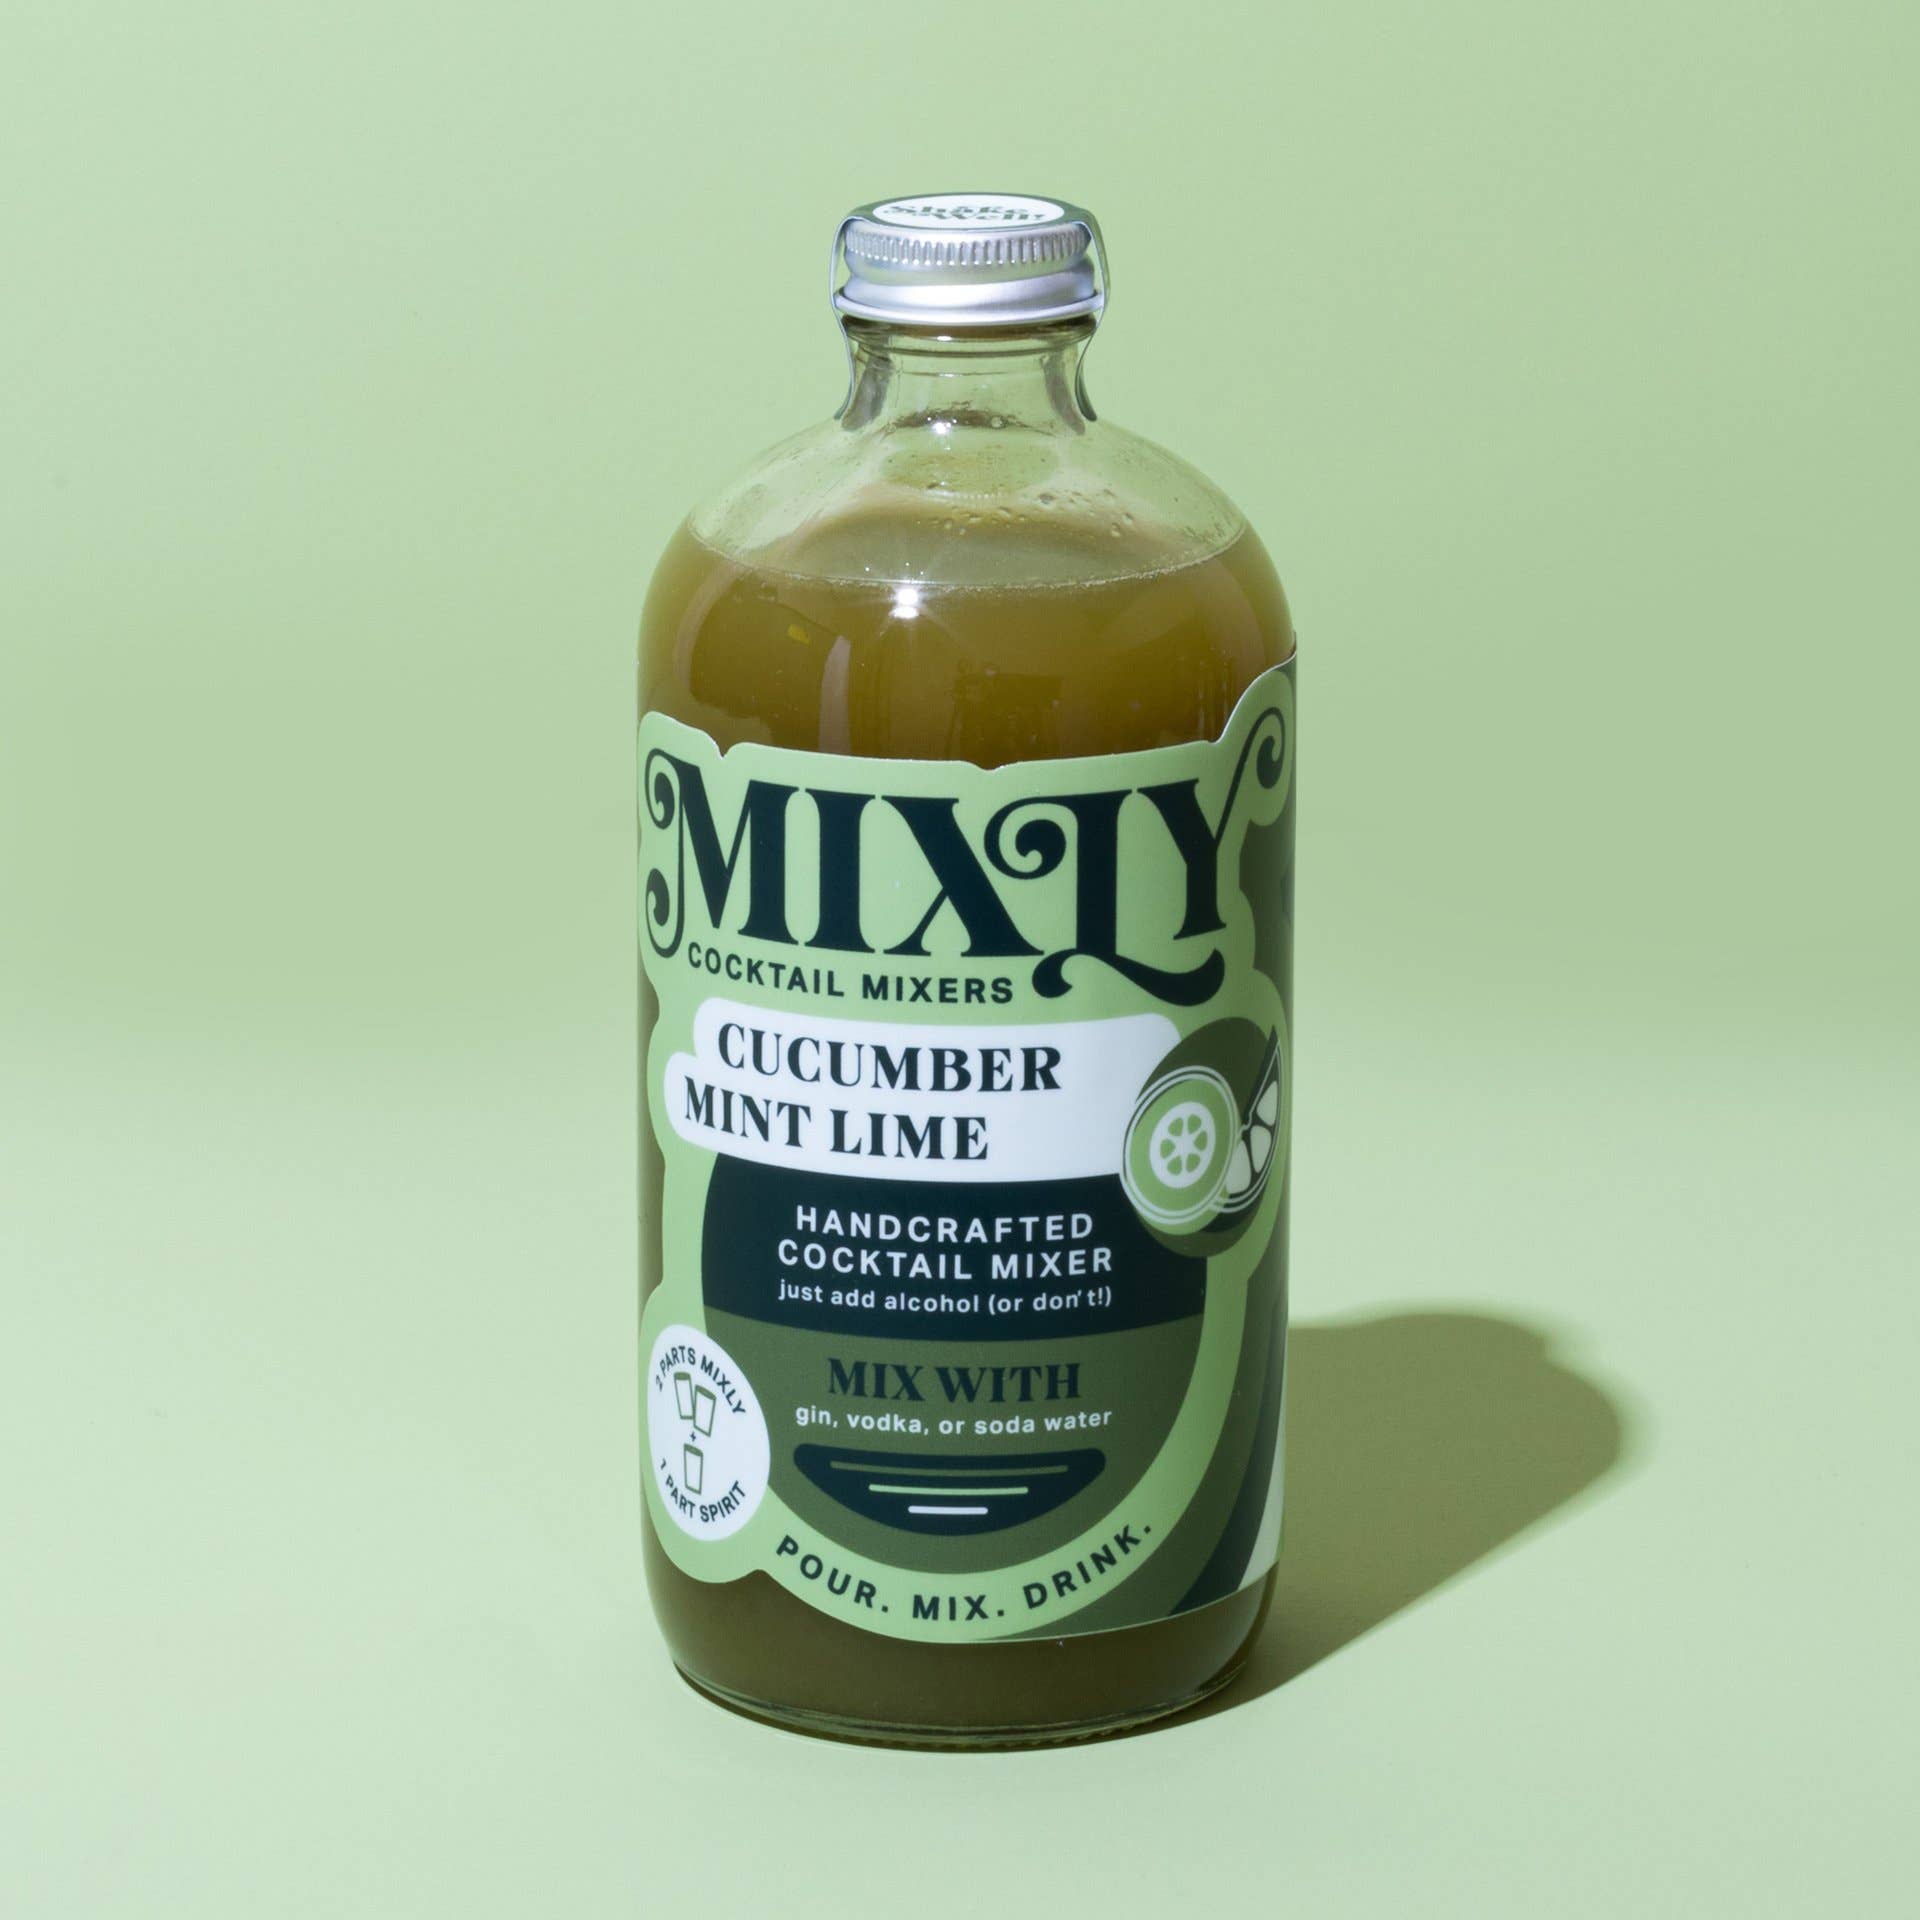 Mixly - Cucumber Mint Lime Mixer